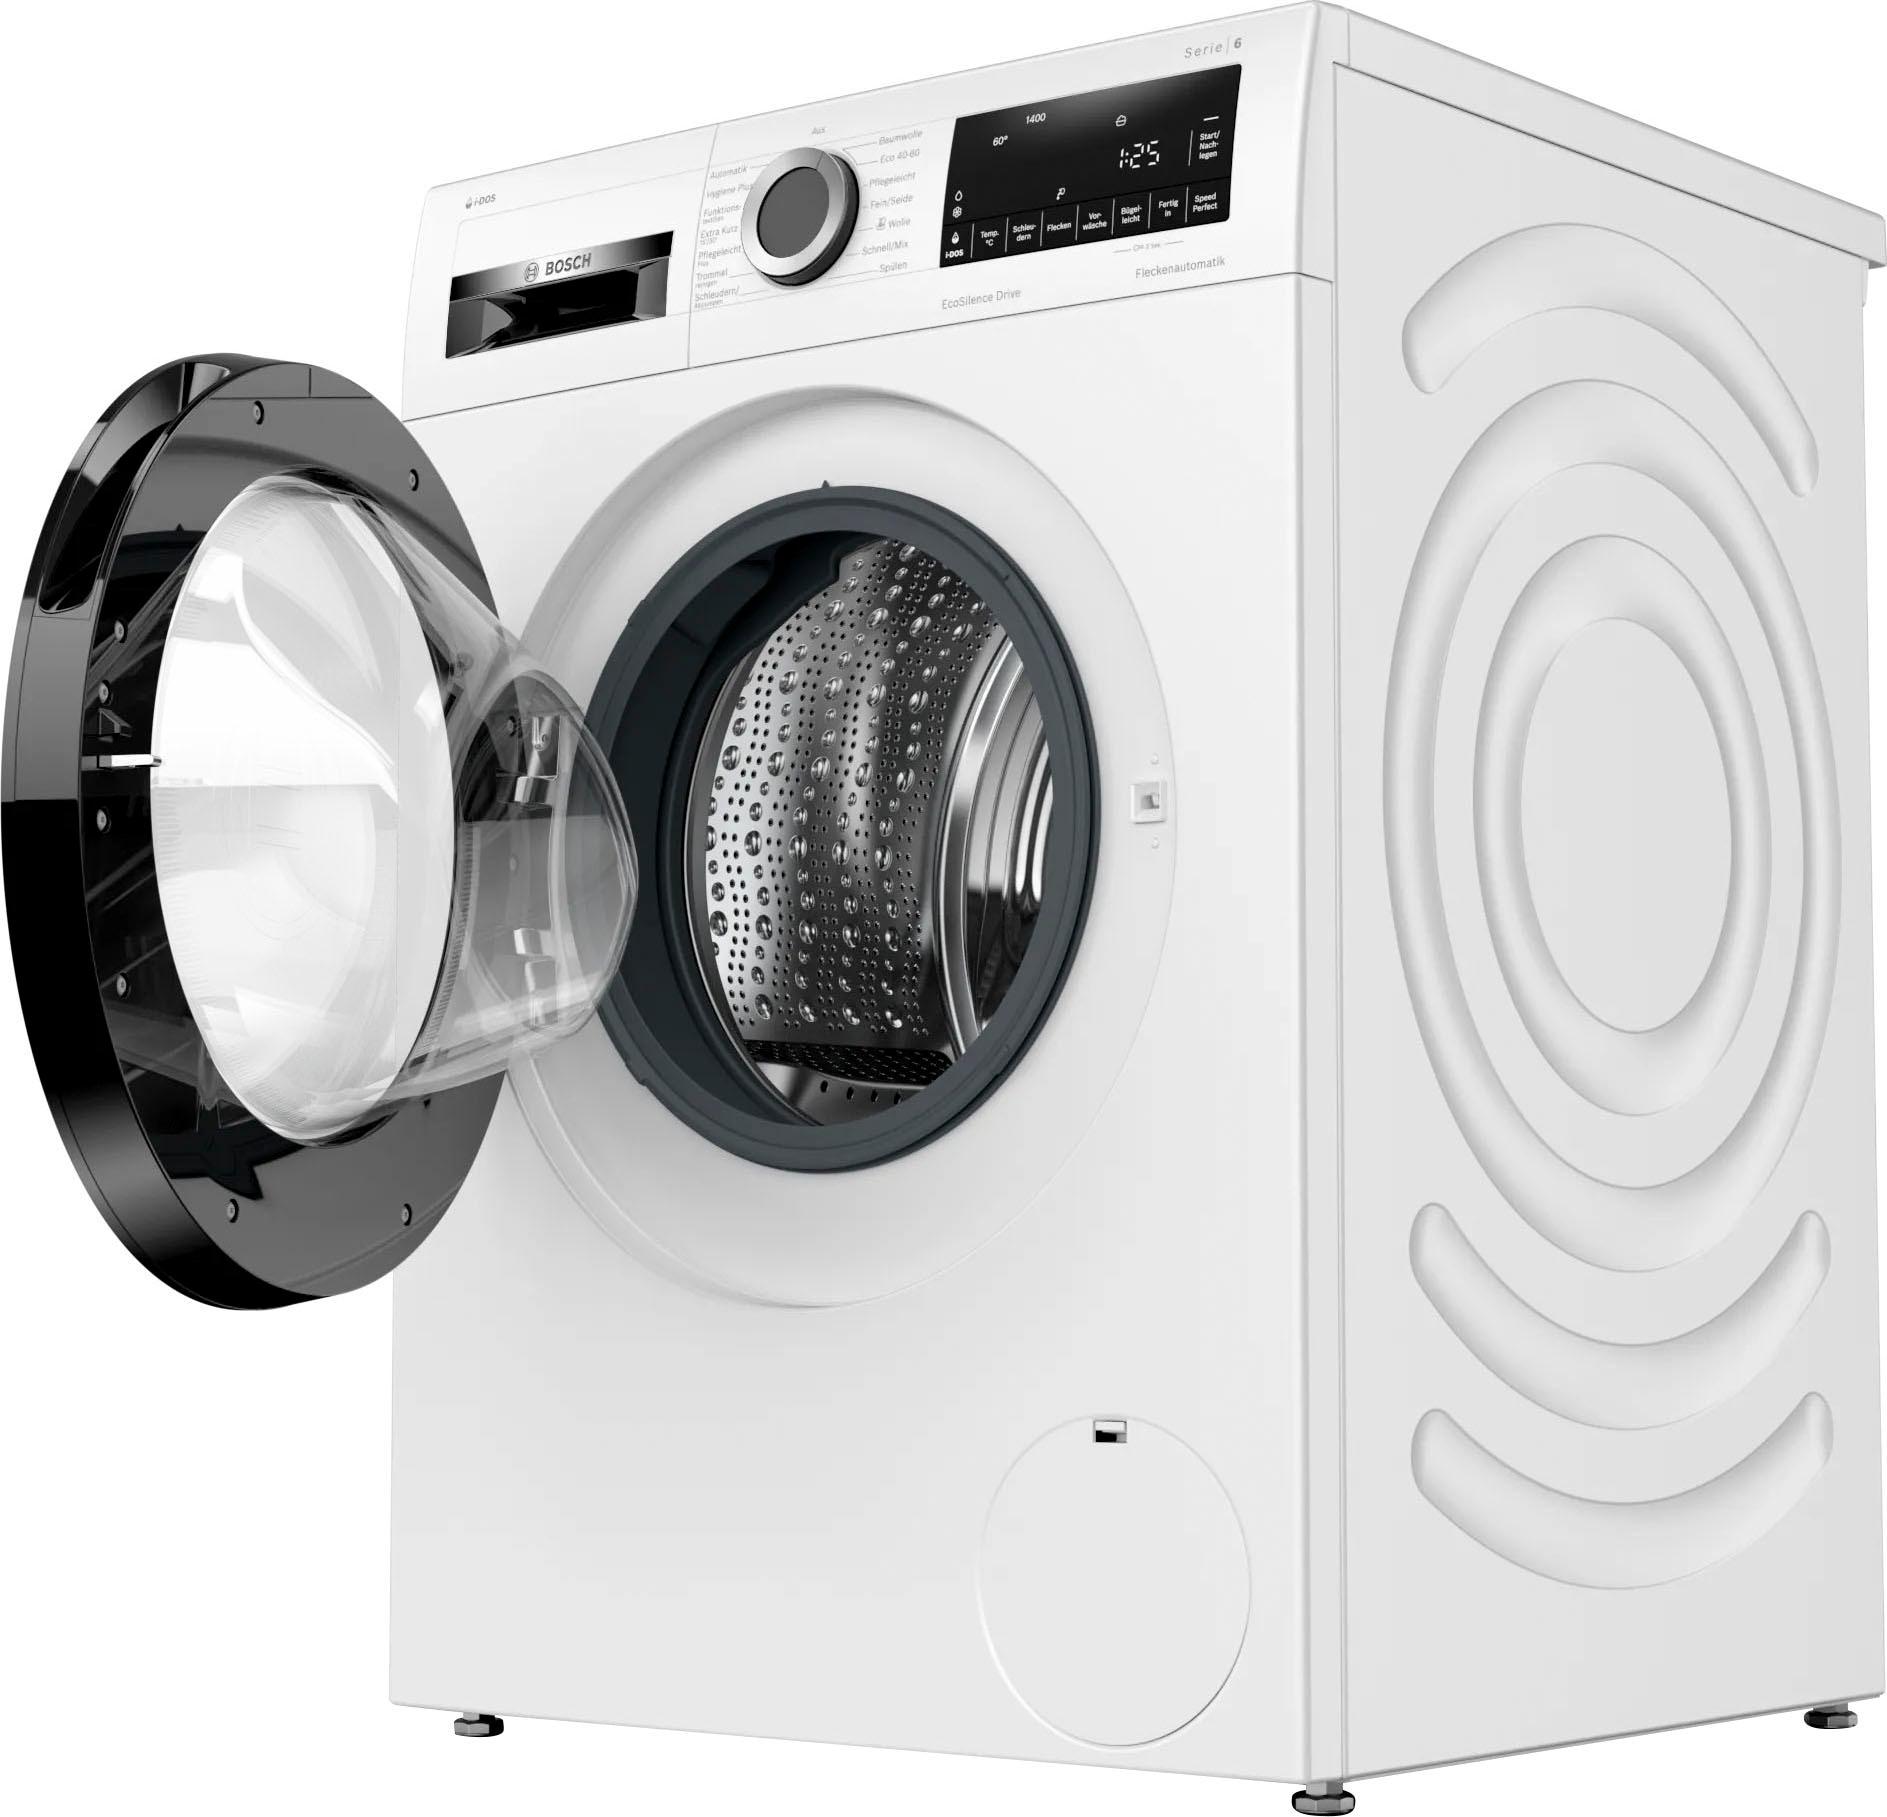 BOSCH Waschmaschine »WGG154A10«, WGG154A10, 10 online U/min bei kg, 1400